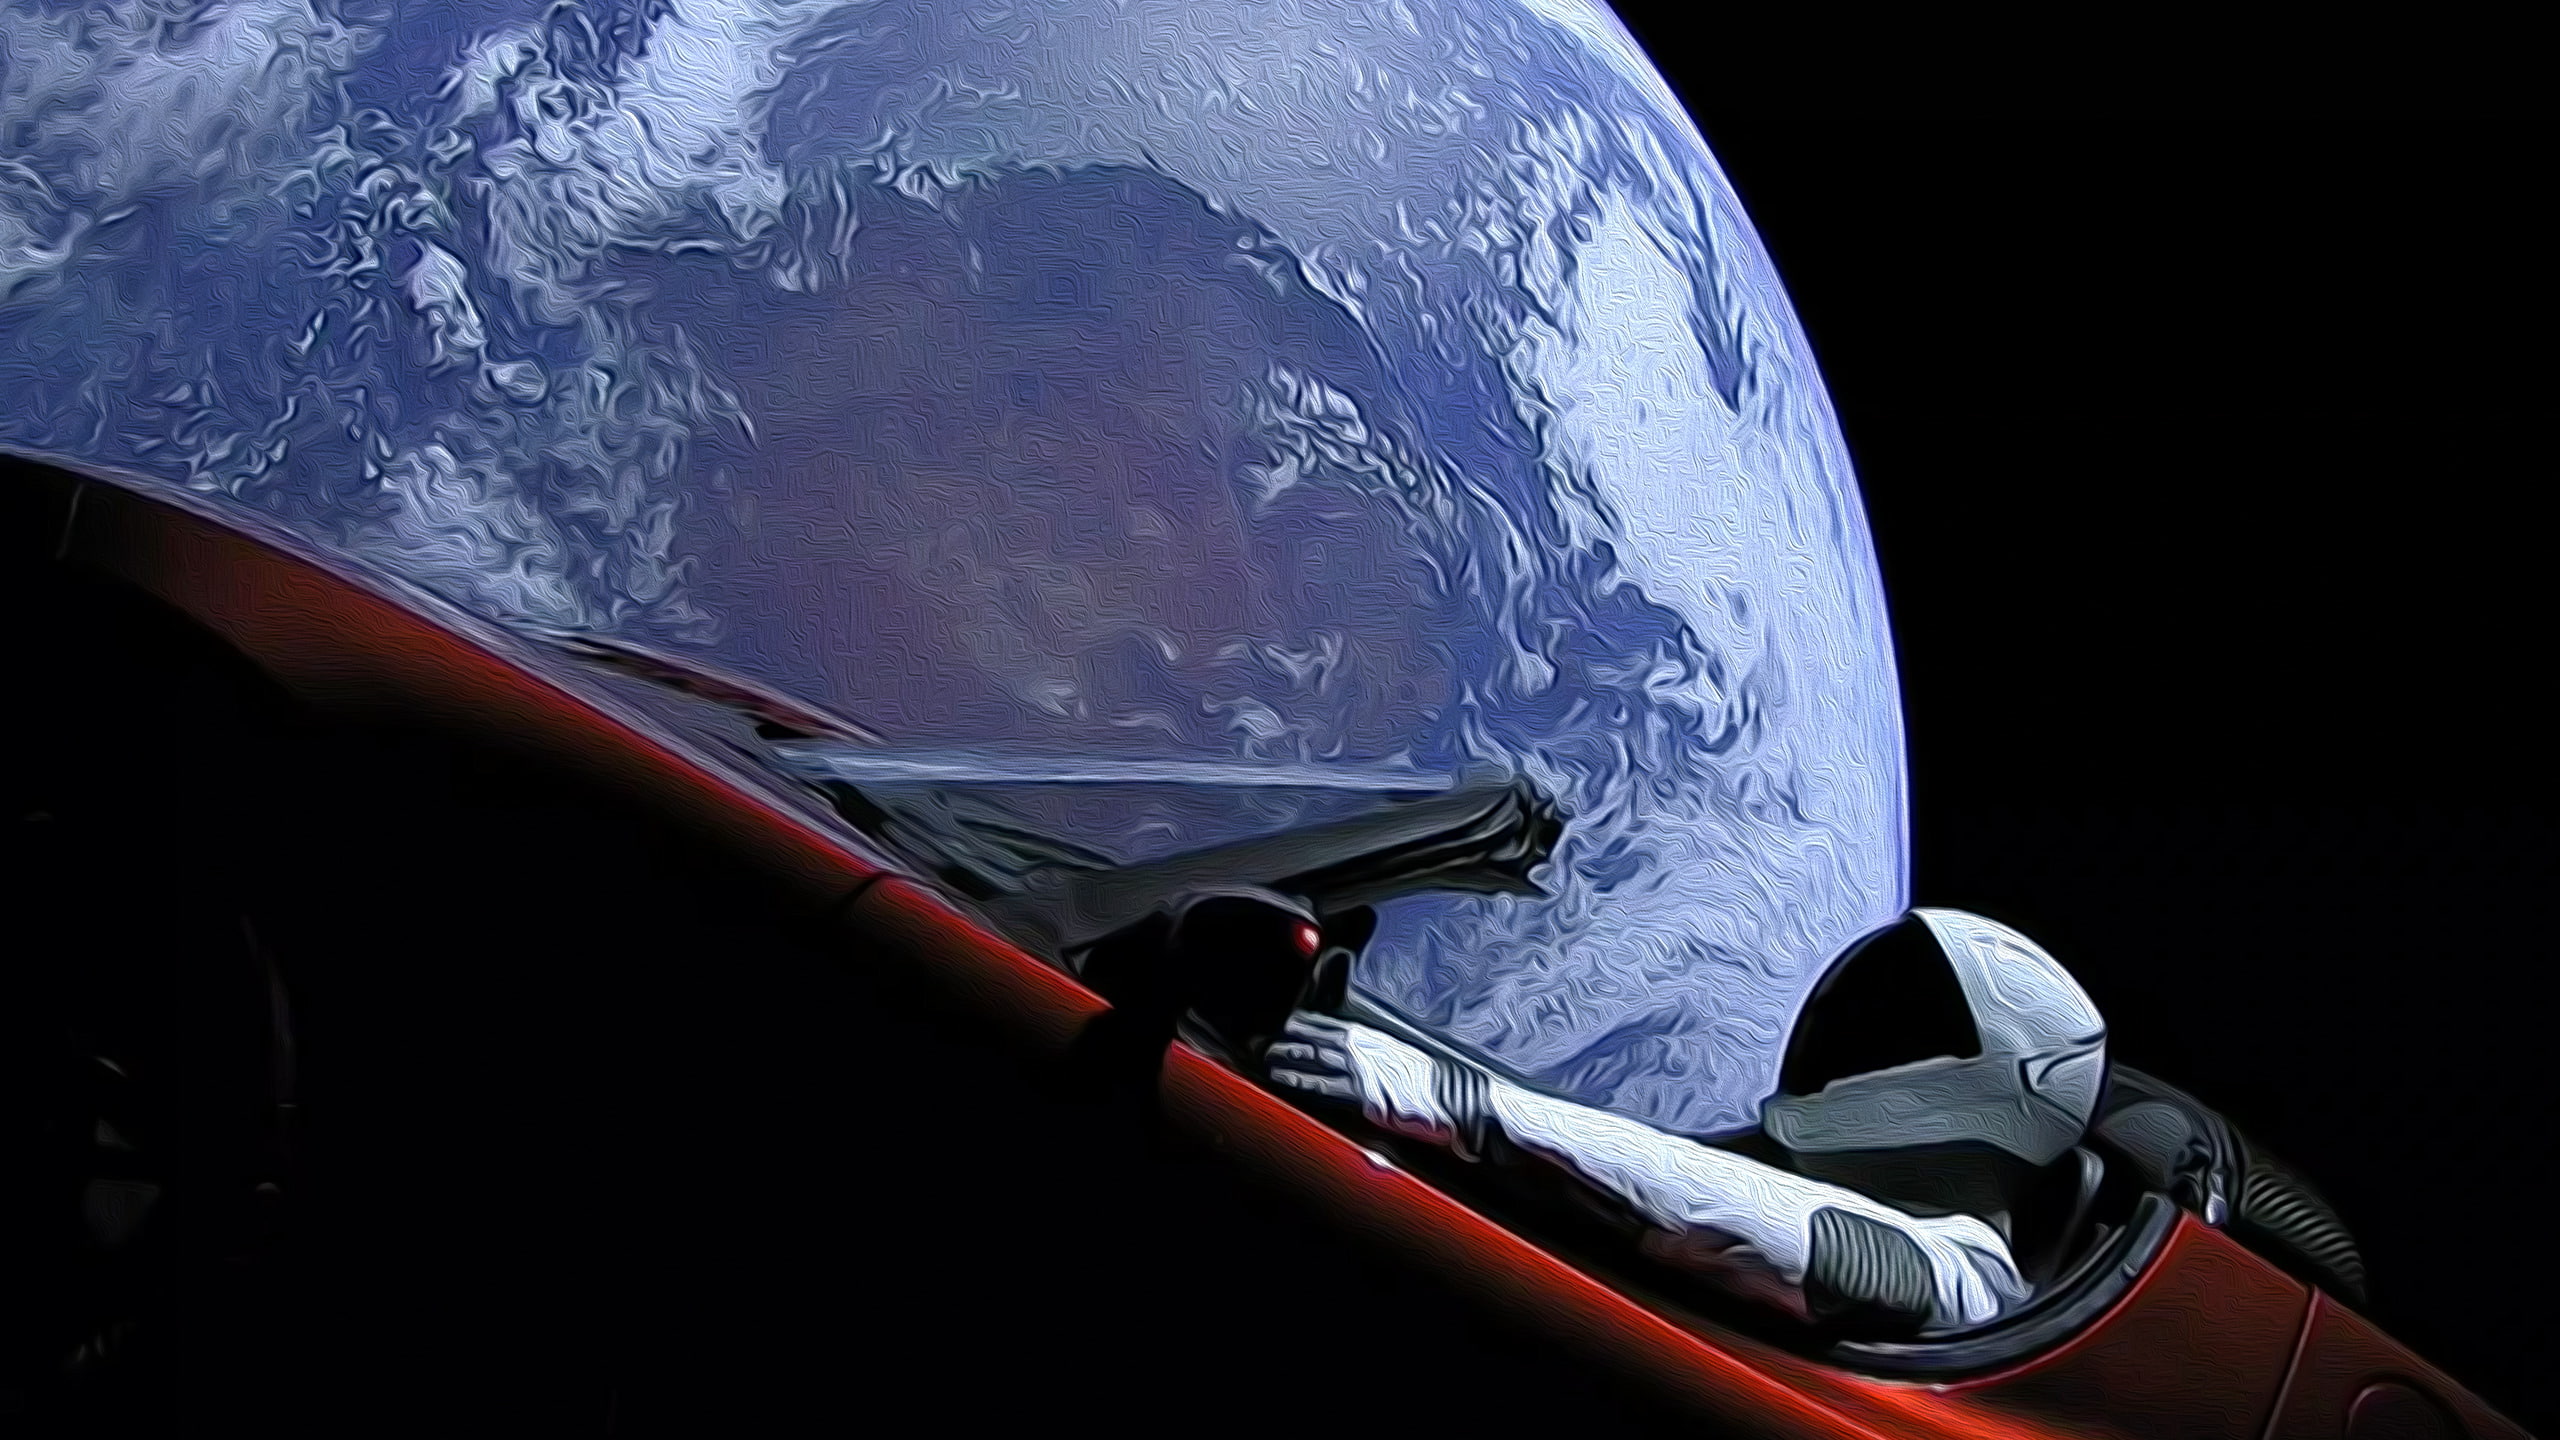 space, car, Starman, Earth, digital art, Tesla Roadster, SpaceX